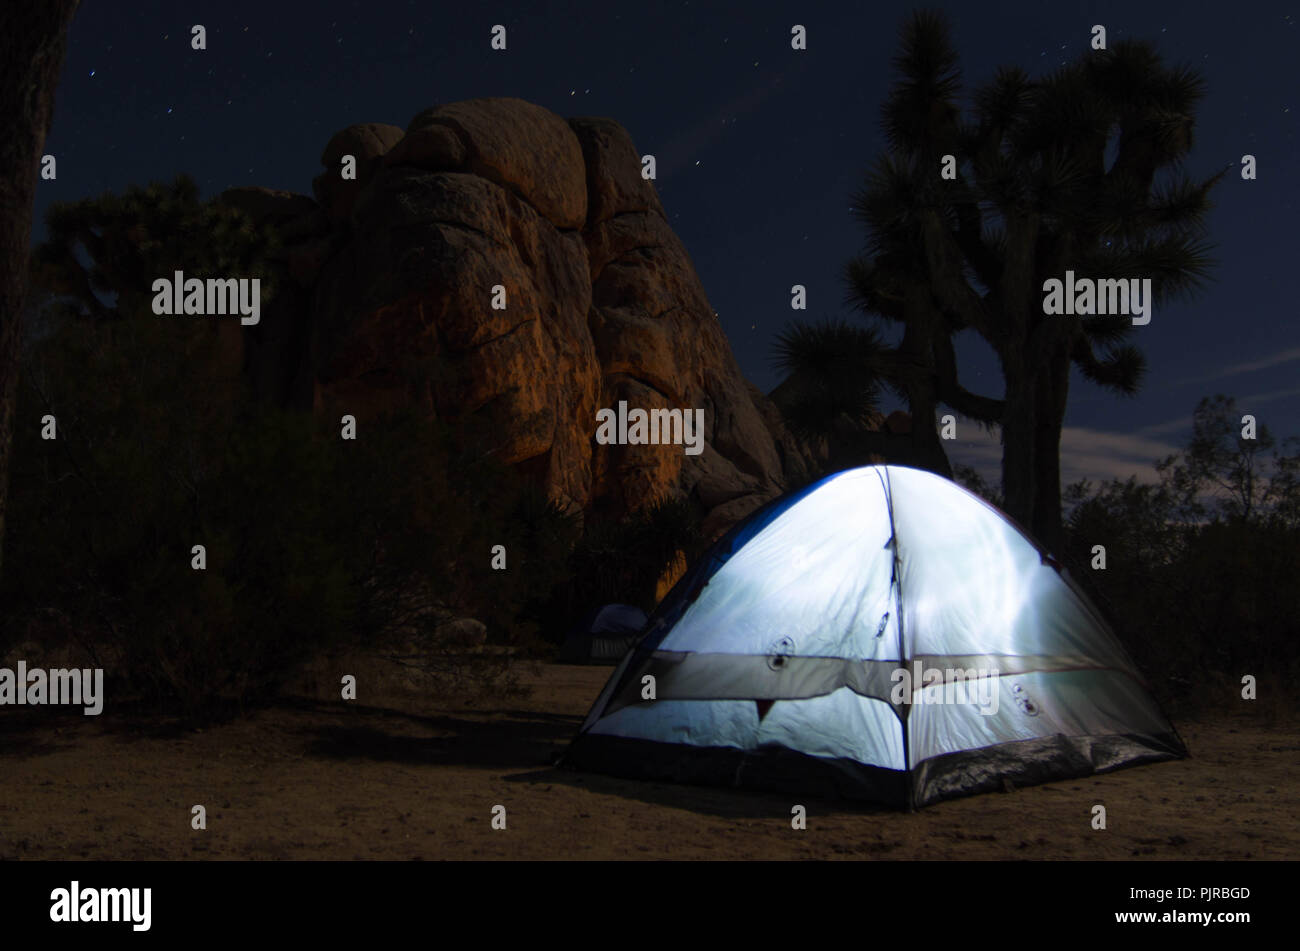 Night scene of a tent shining white at Joshua tree national park in California USA Stock Photo